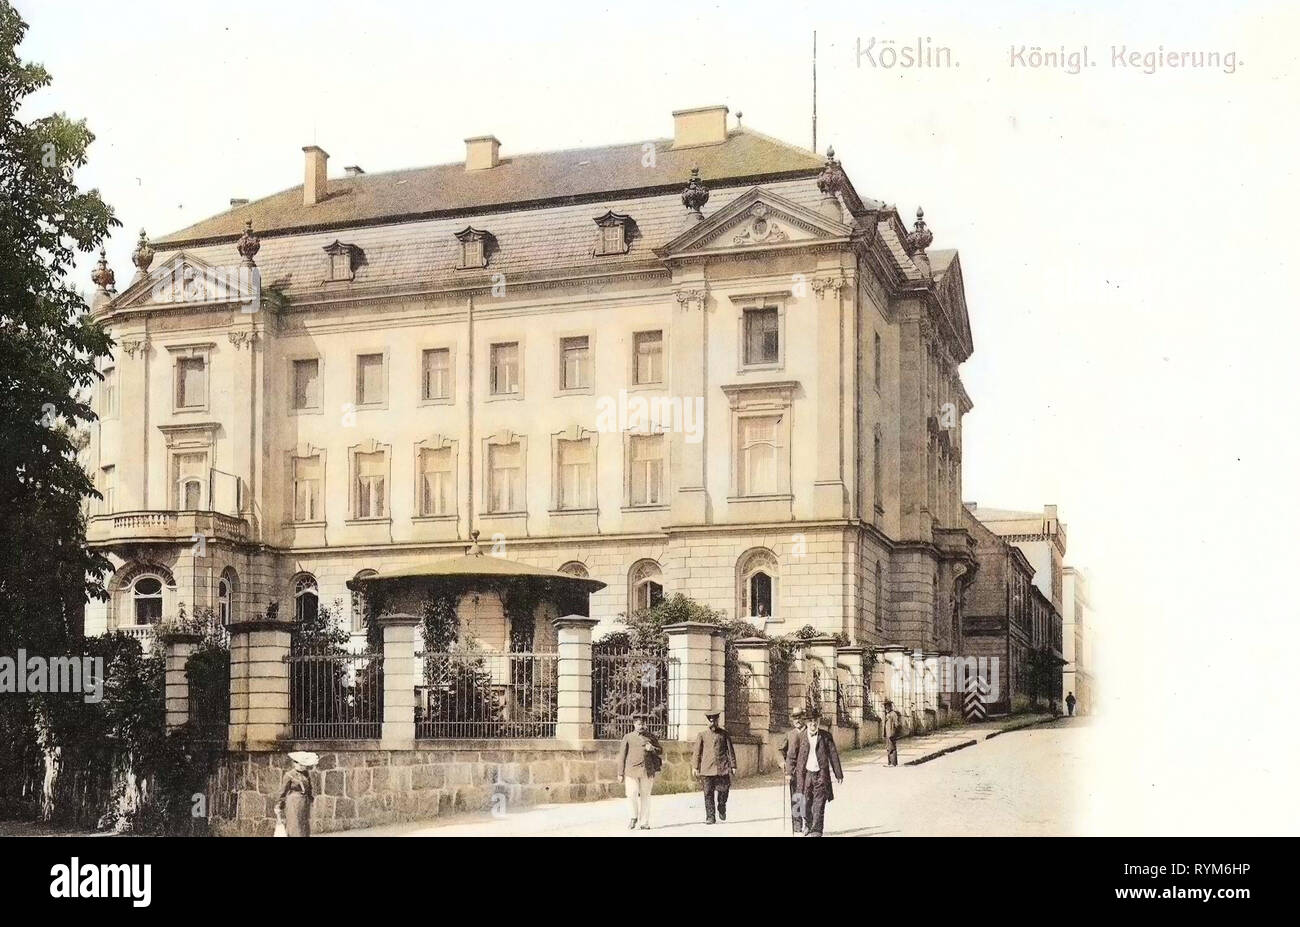 History of Koszalin, 1903, West Pomeranian Voivodeship, Regierungsbezirk administration buildings, Köslin, Regierung Stock Photo